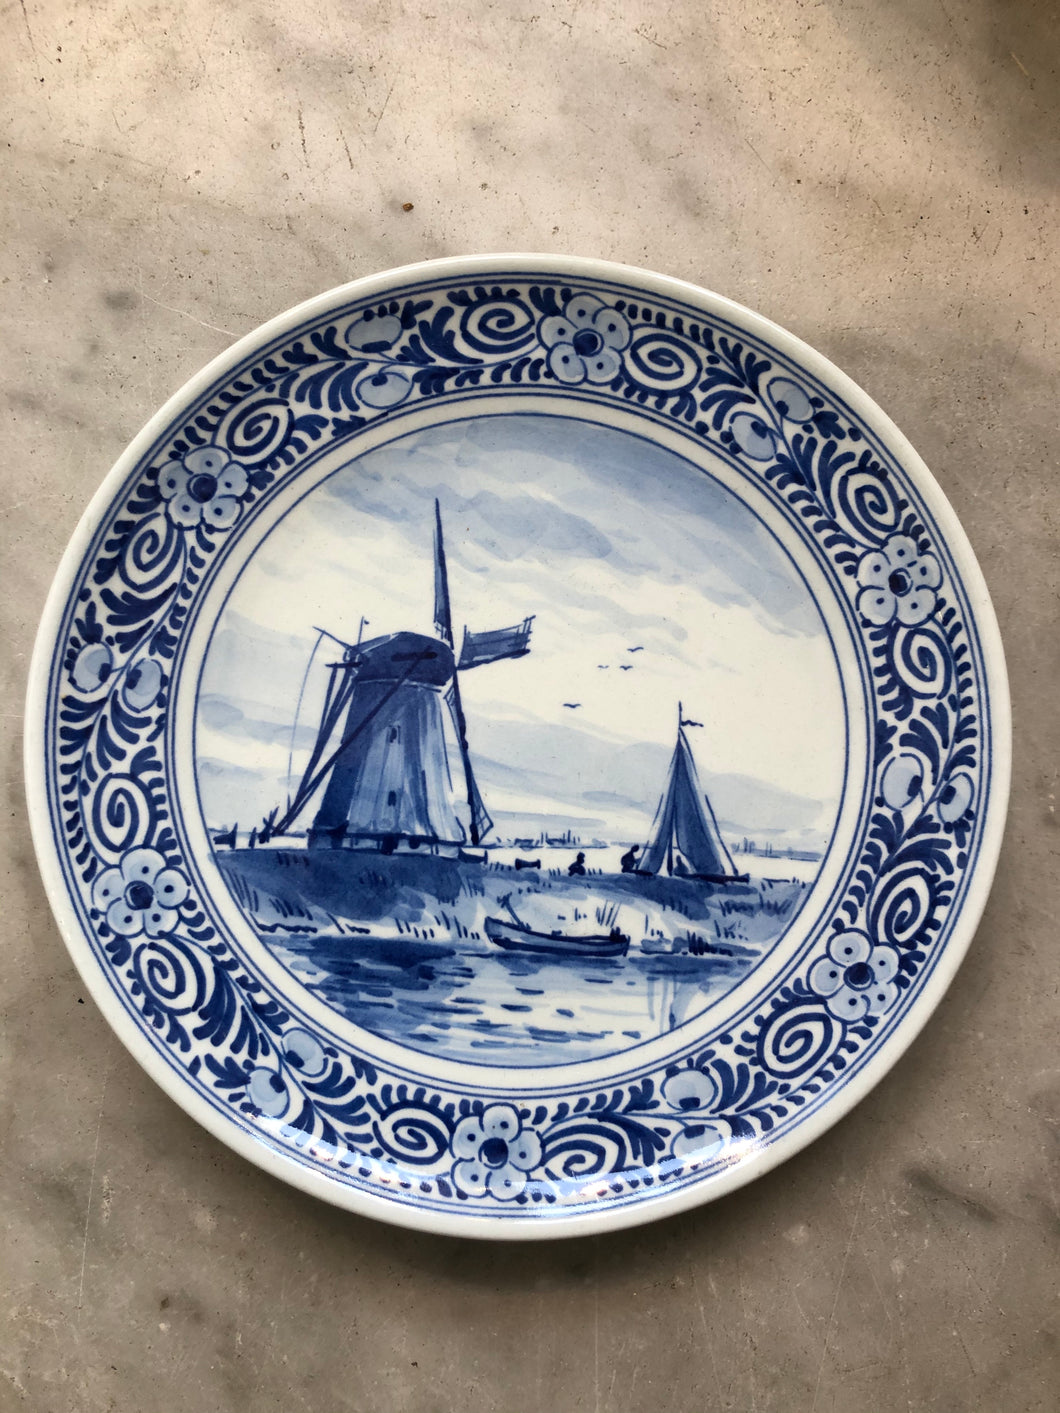 Royal Delft handpainted dutch plate with landscape scene